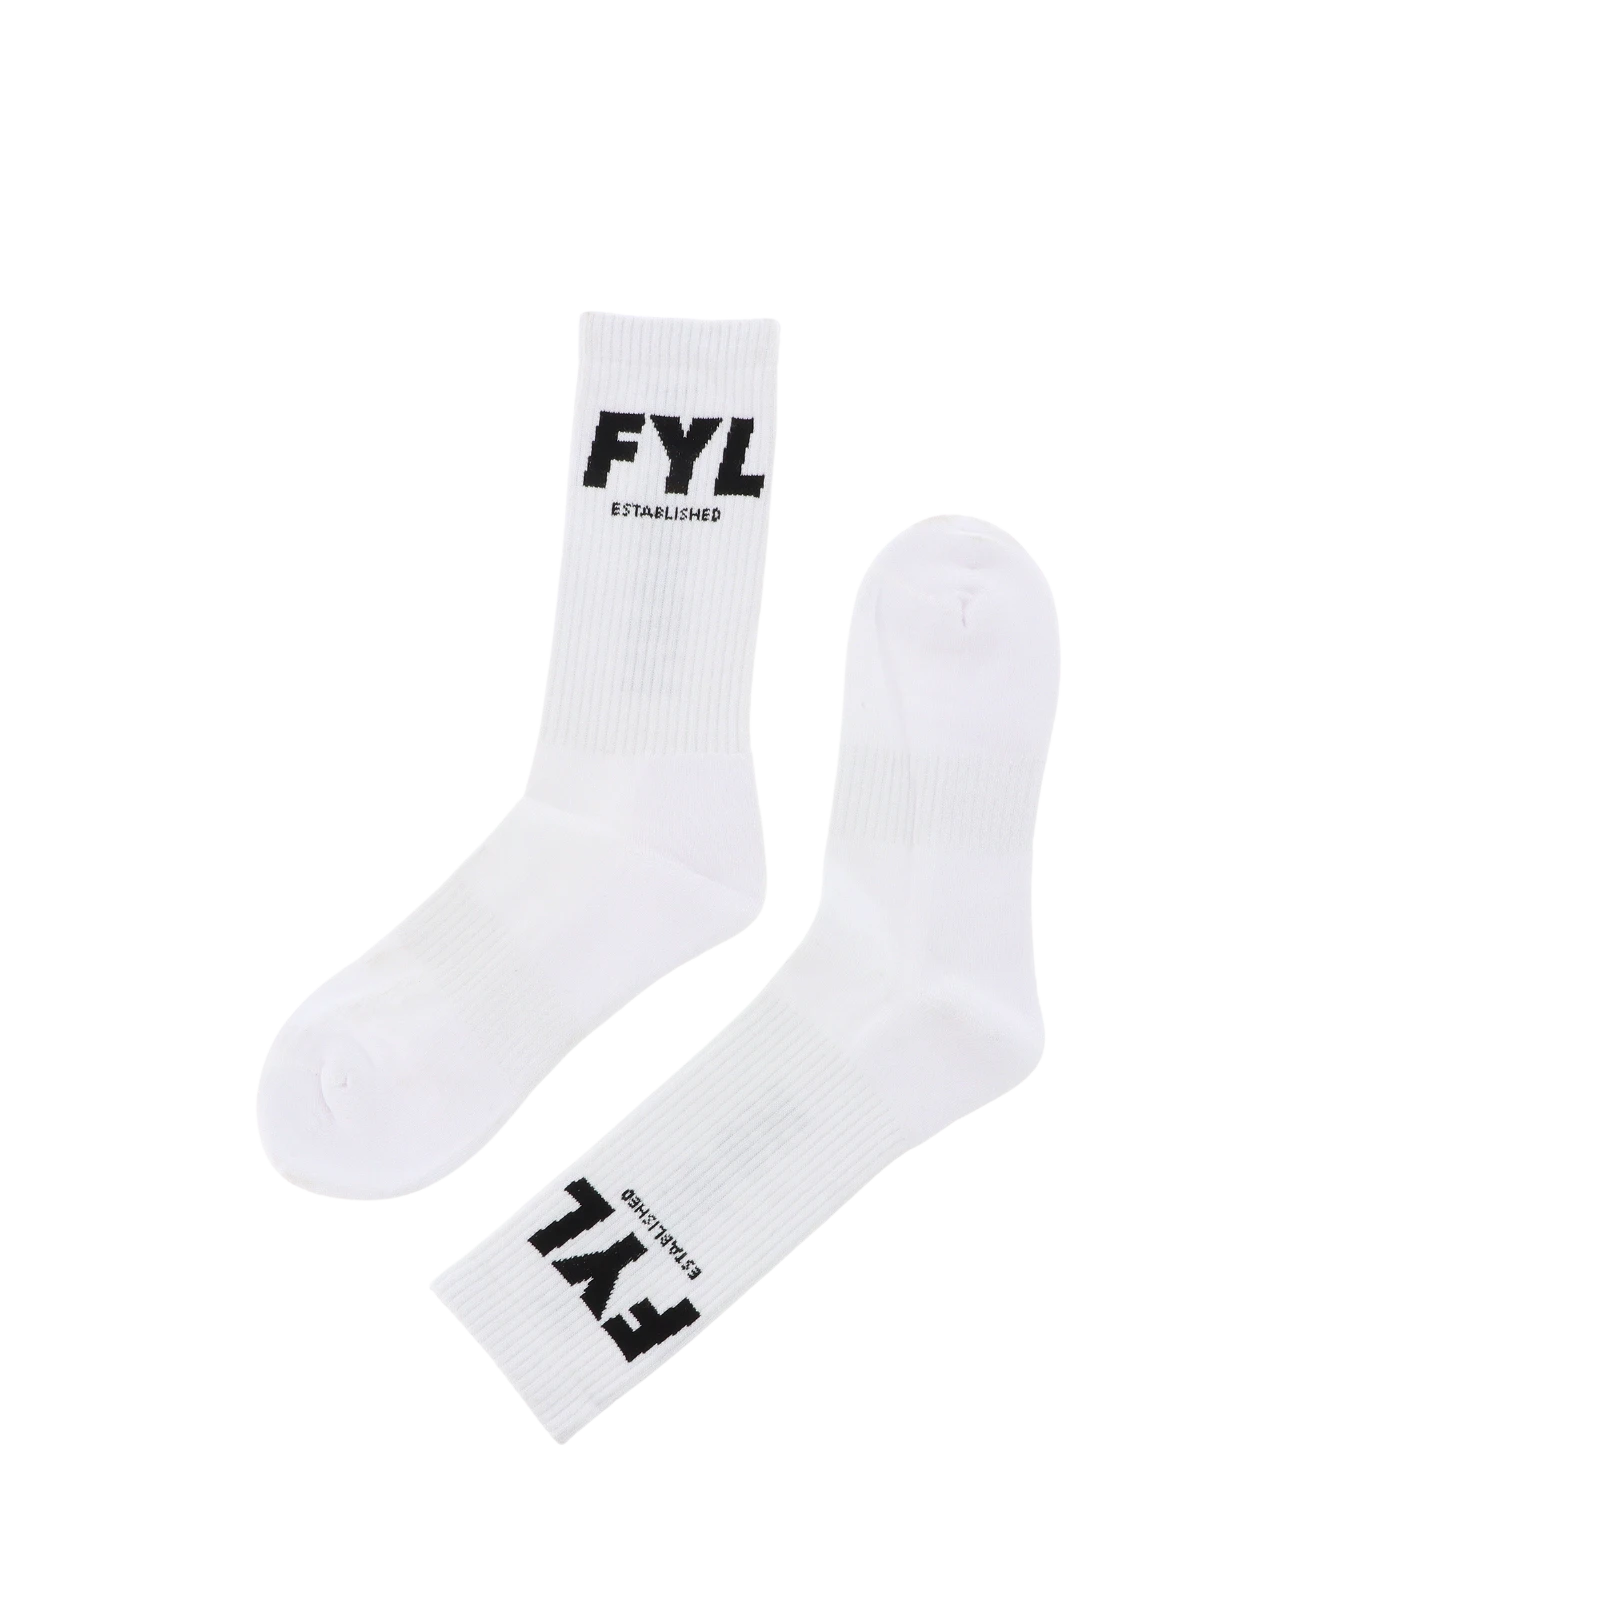 White Socks - Hookain - Fyl - Block - L